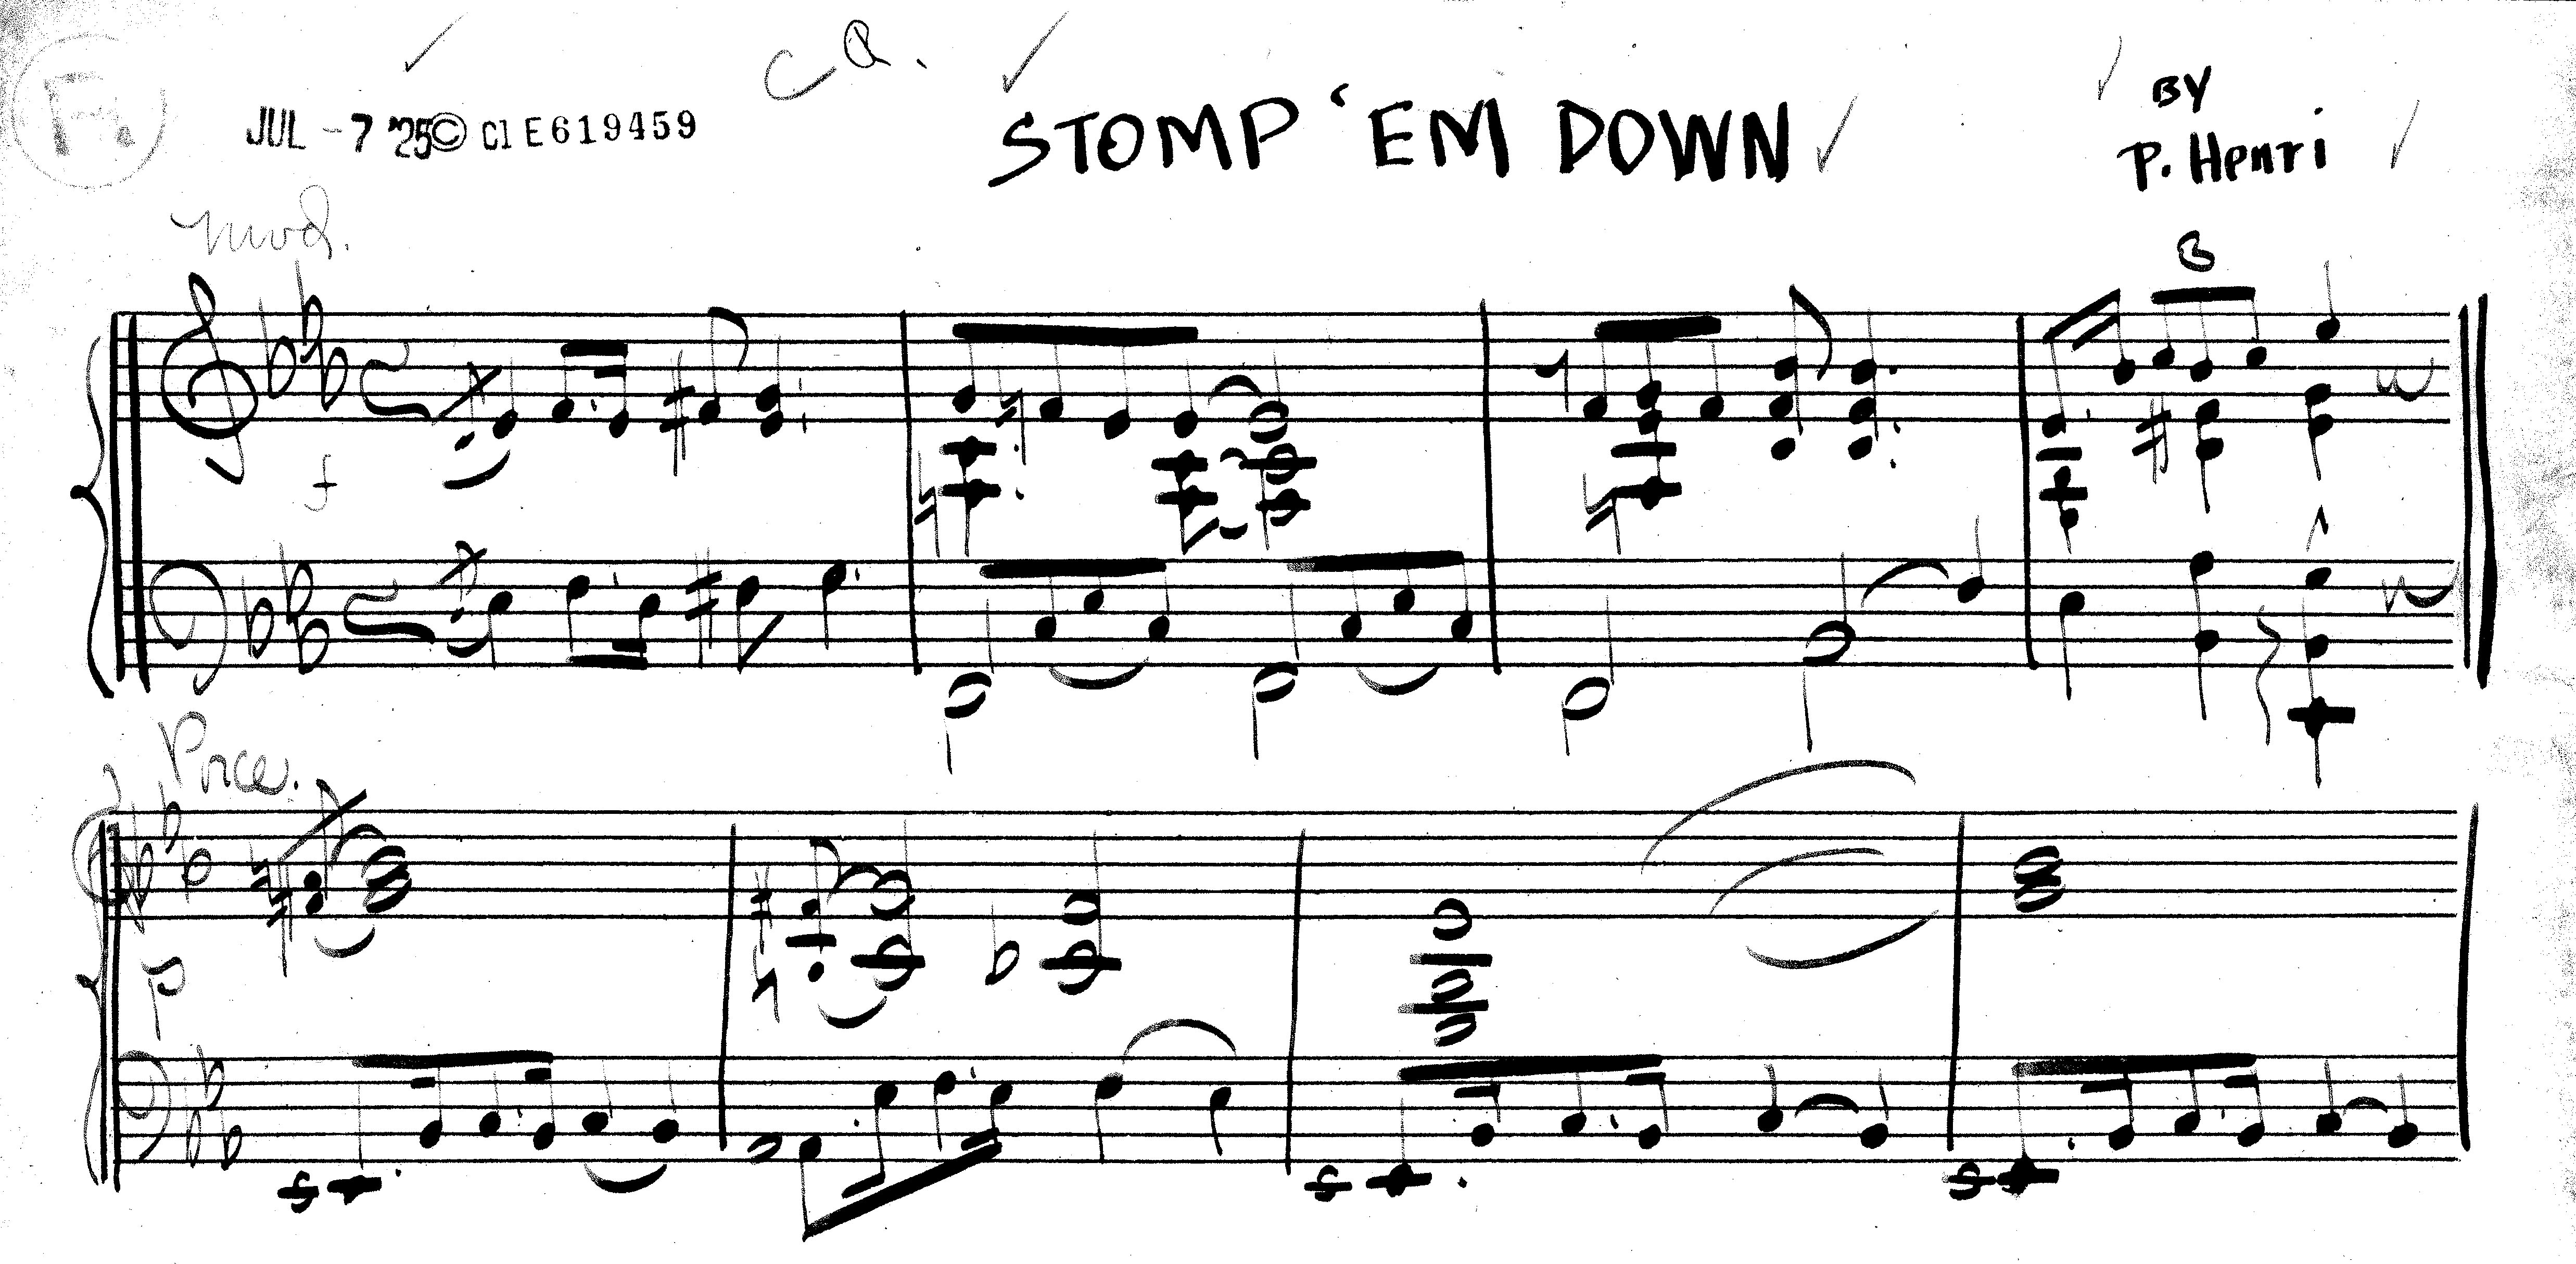 Stomp 'Em Down copyright deposition 1925